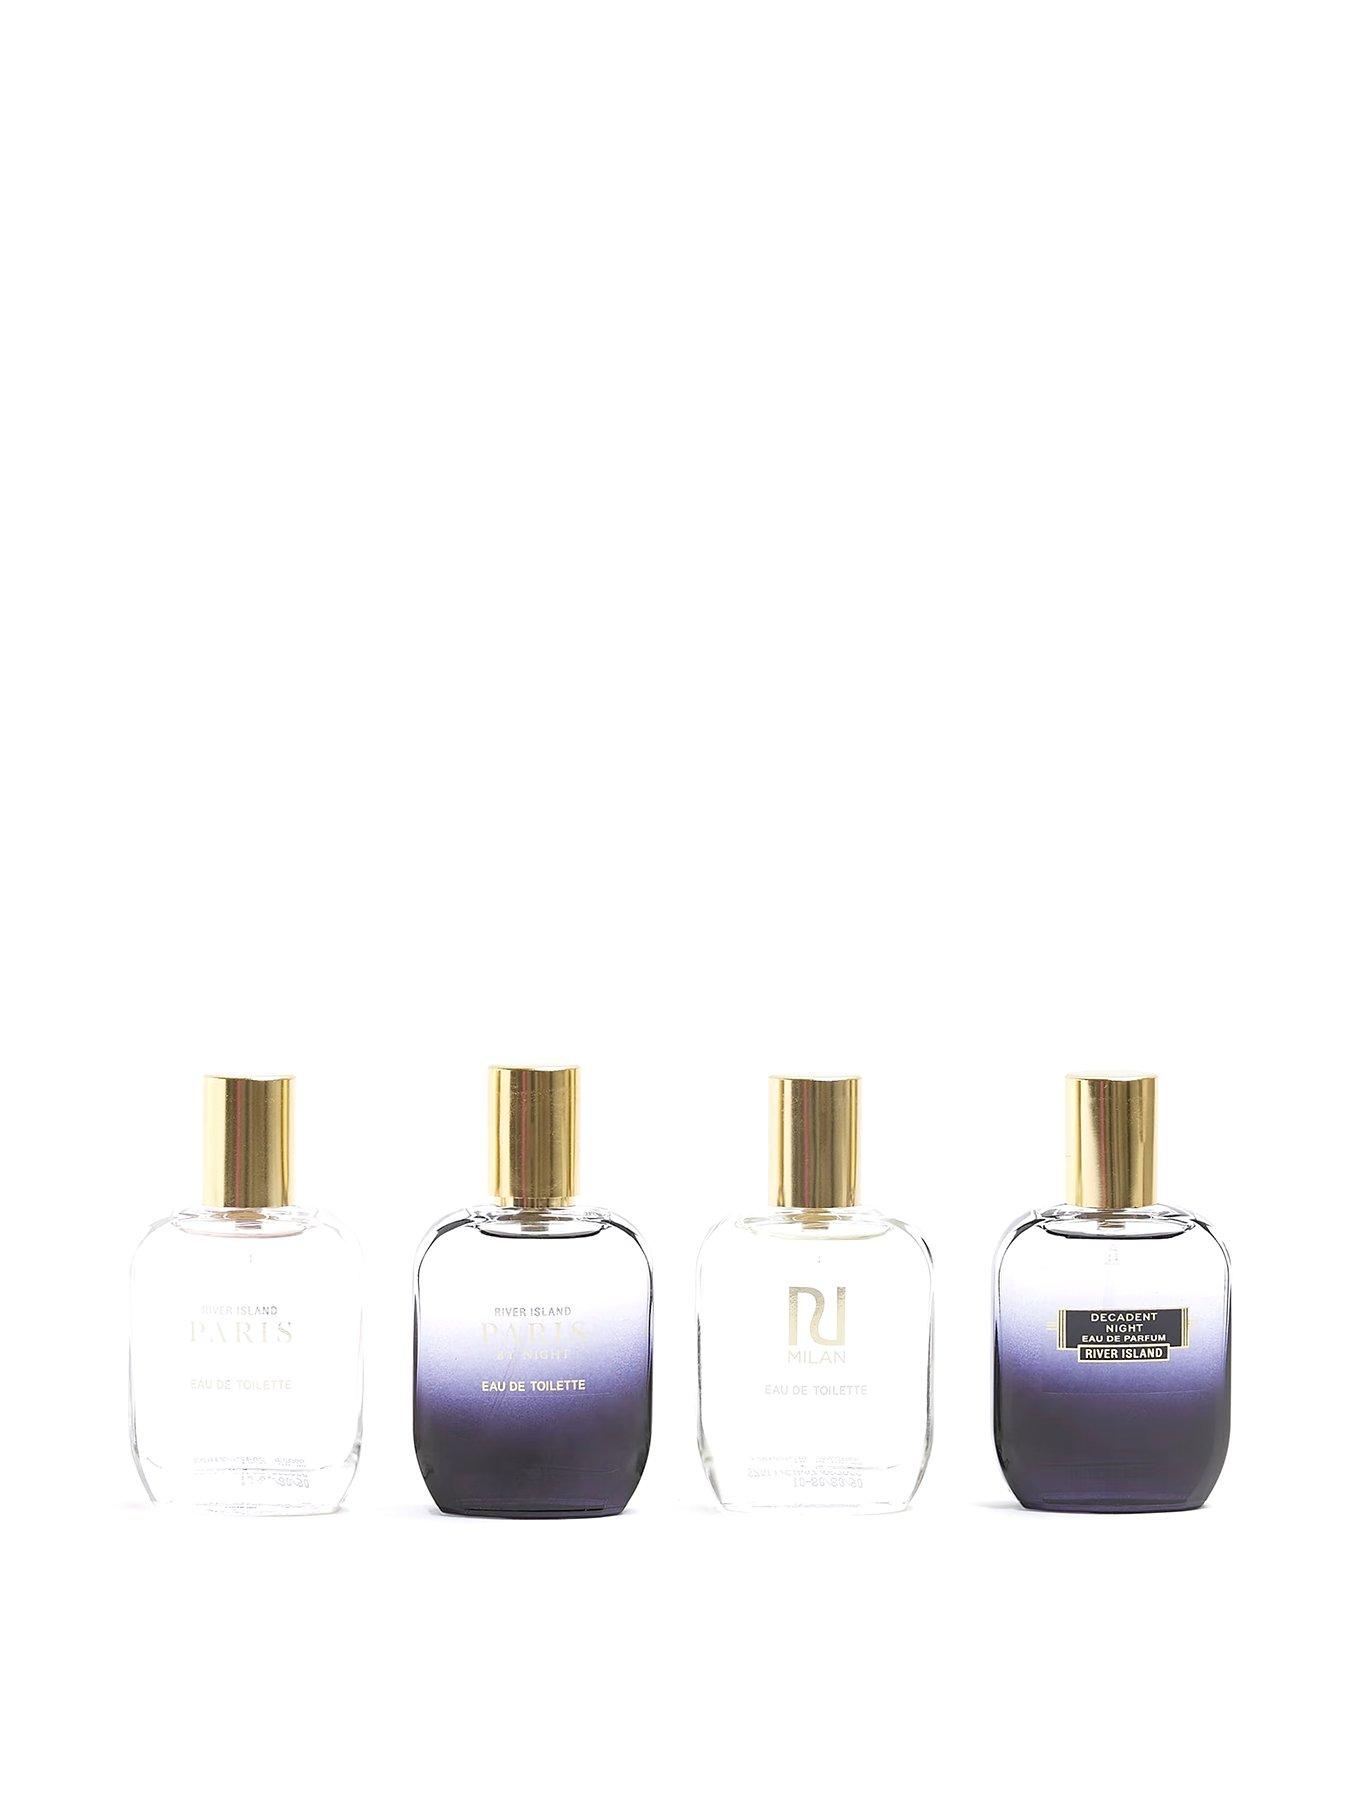 Premium, Perfume, Beauty